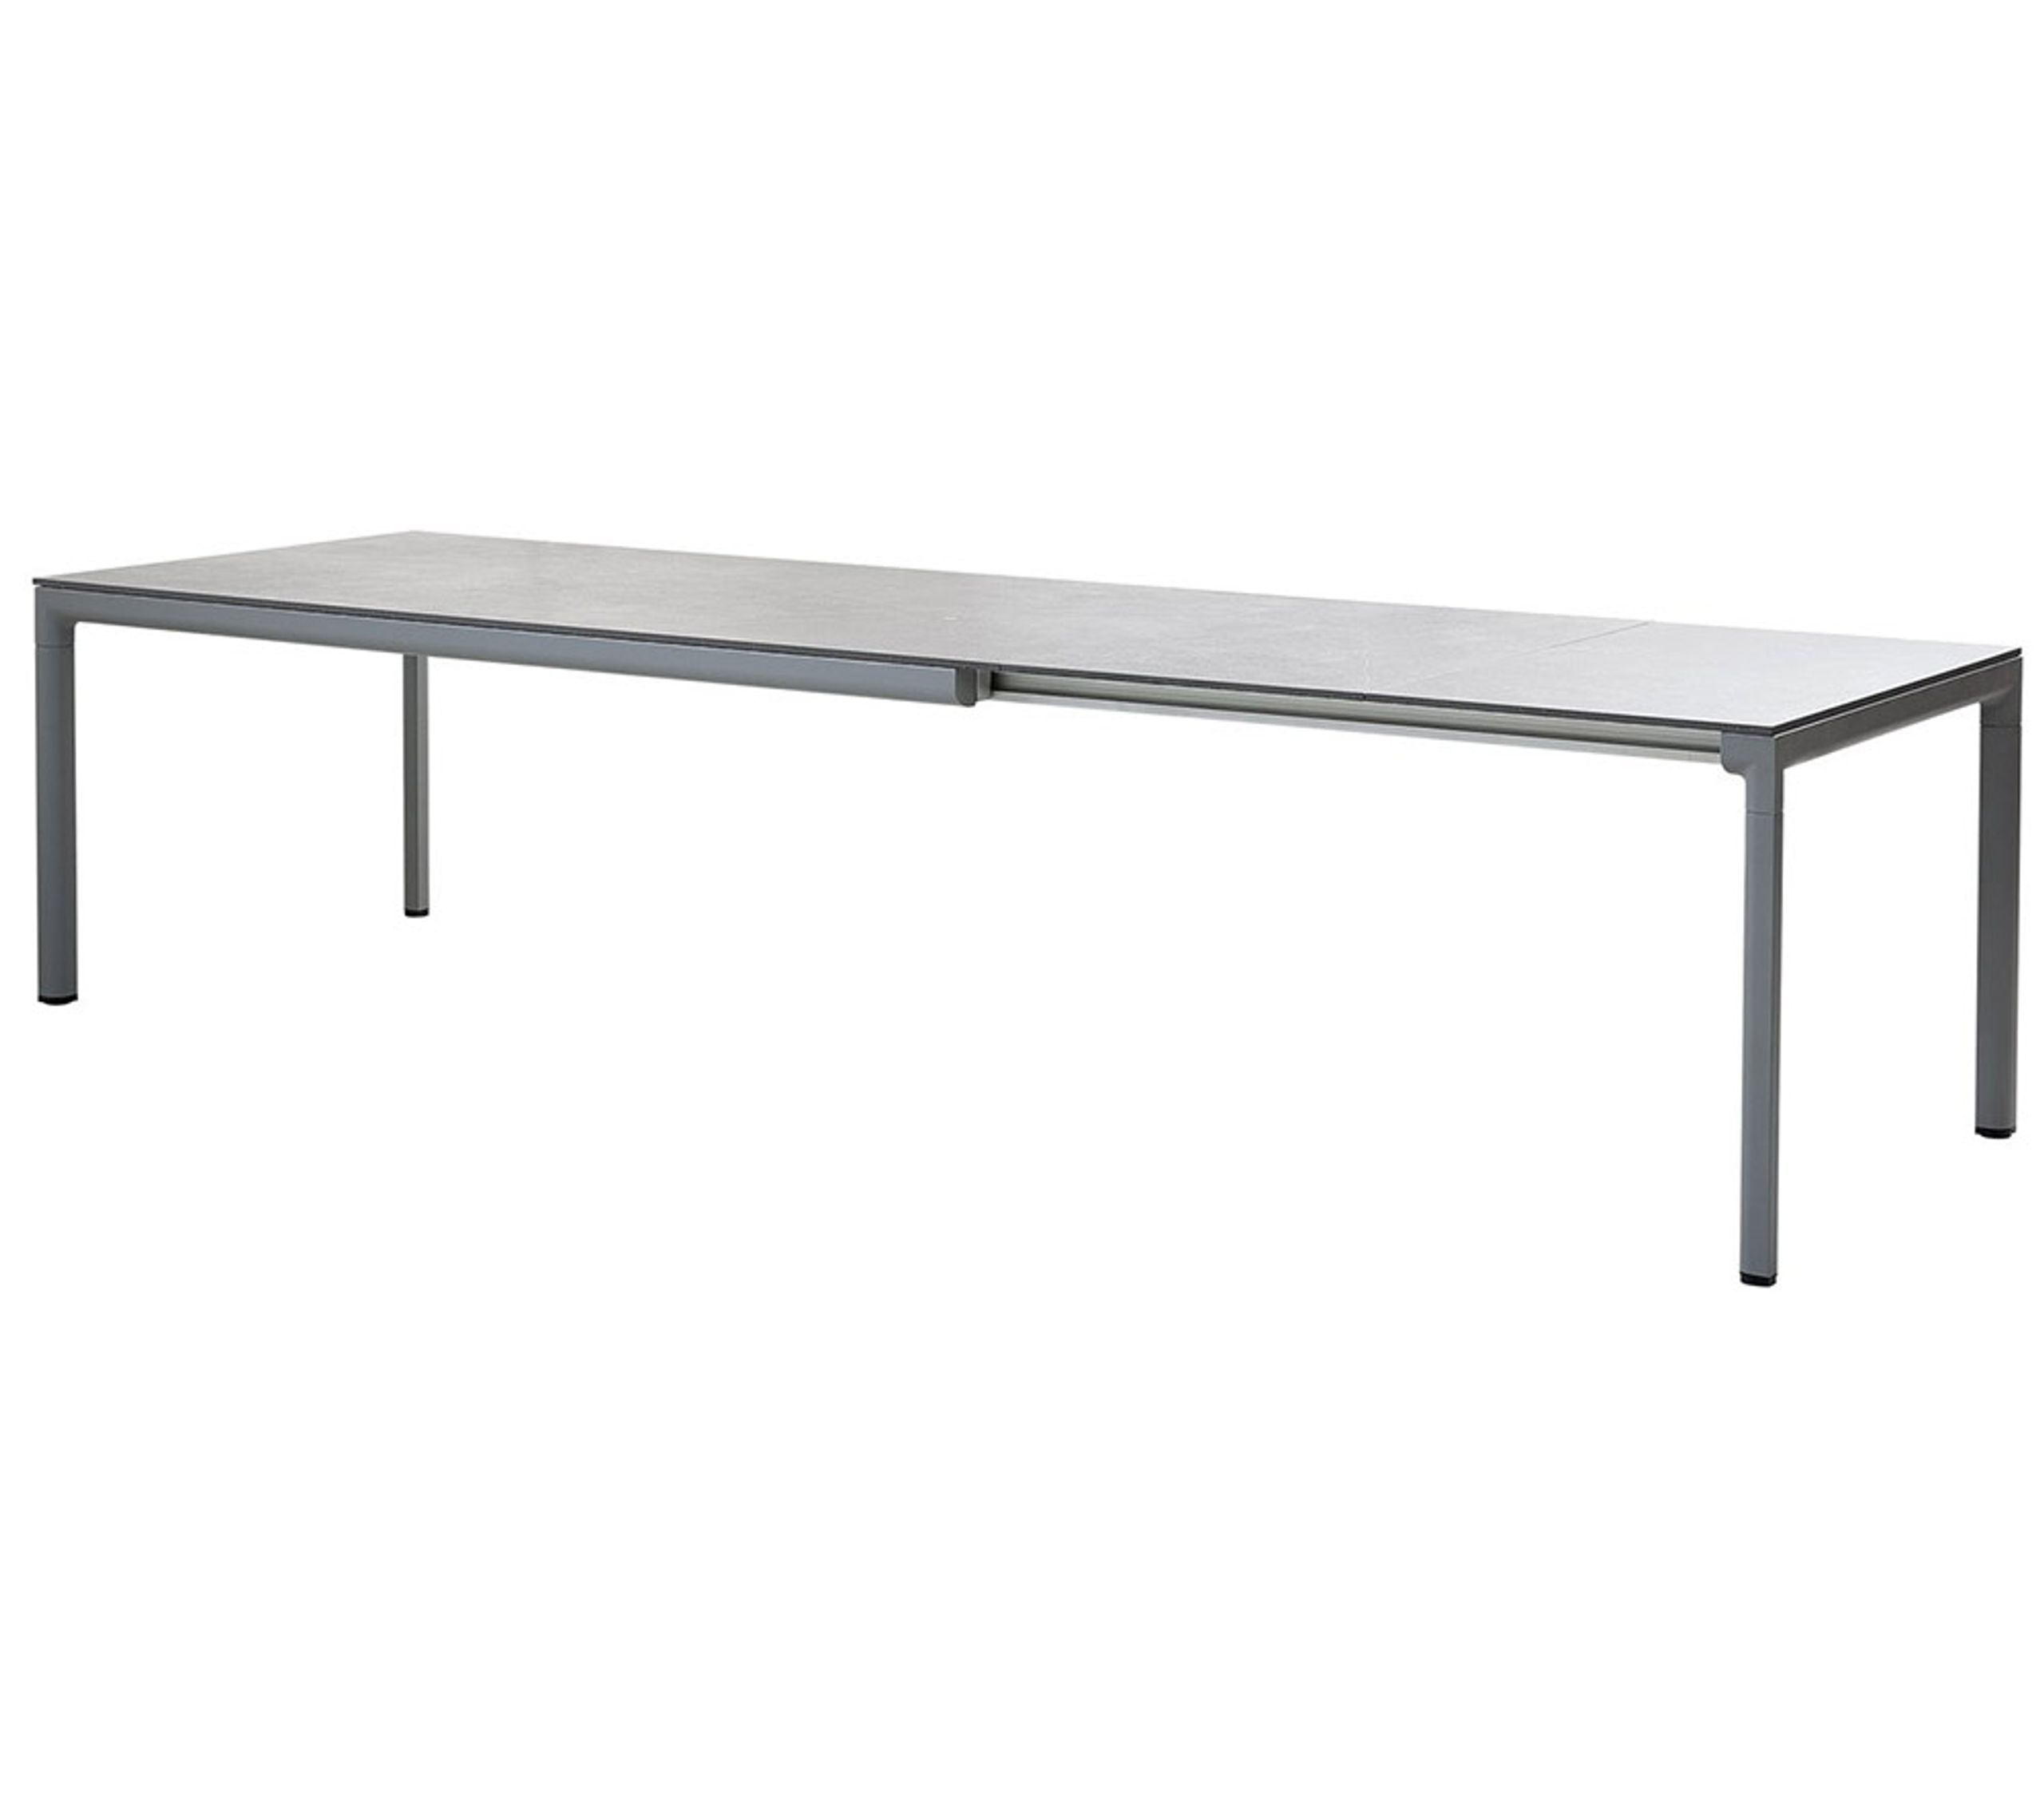 Cane-line - Table de jardin - Drop Dining Table w/120 cm extension  - Frame: Light Grey Aluminum / Tabletop: Grey Fossil Ceramic - Incl. 2 extension leaves